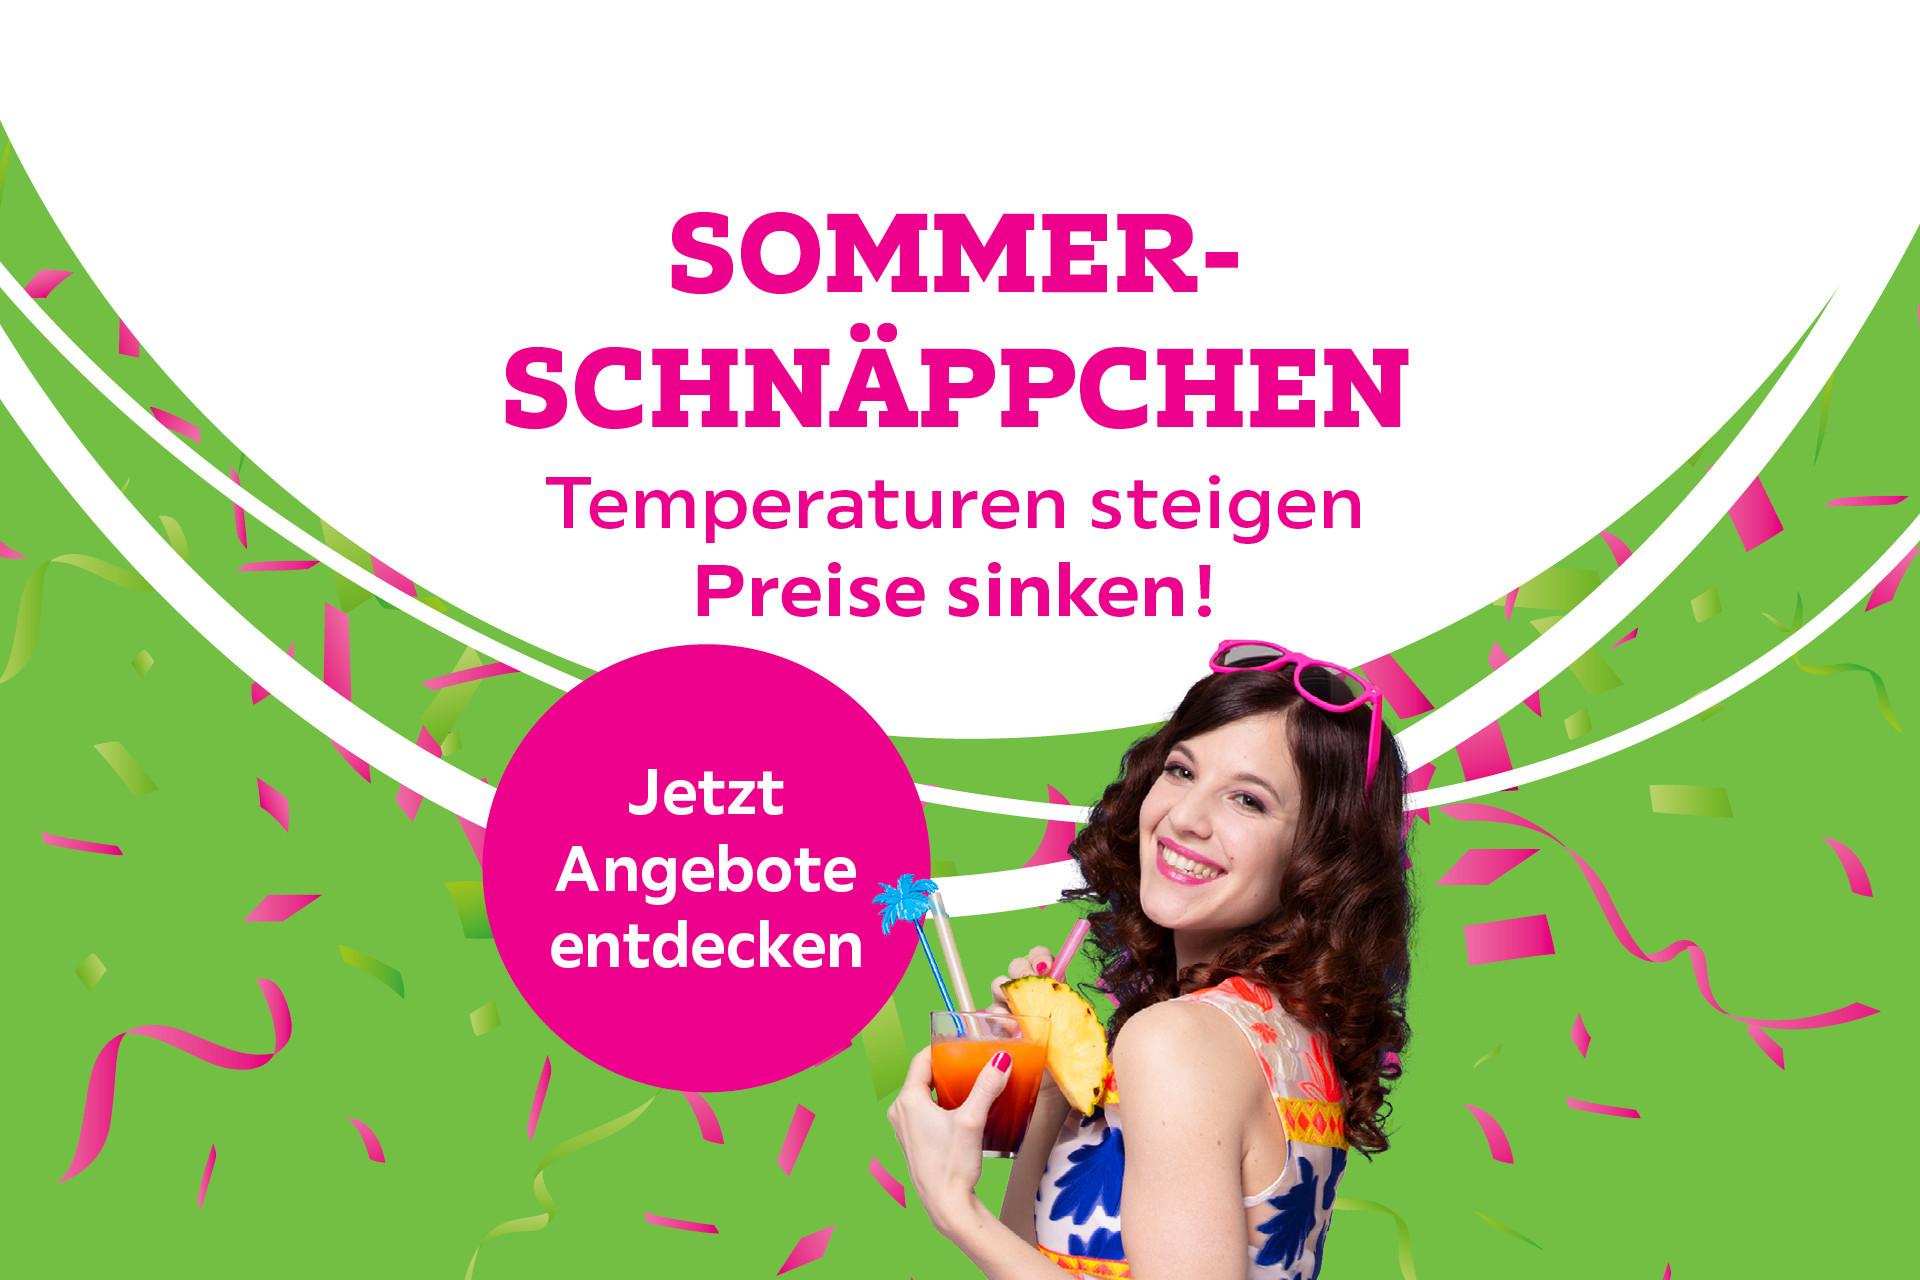 MMX-AT-DE-FP-Teasercard-Sommerschnaepchen-KW31_REIE_5.png